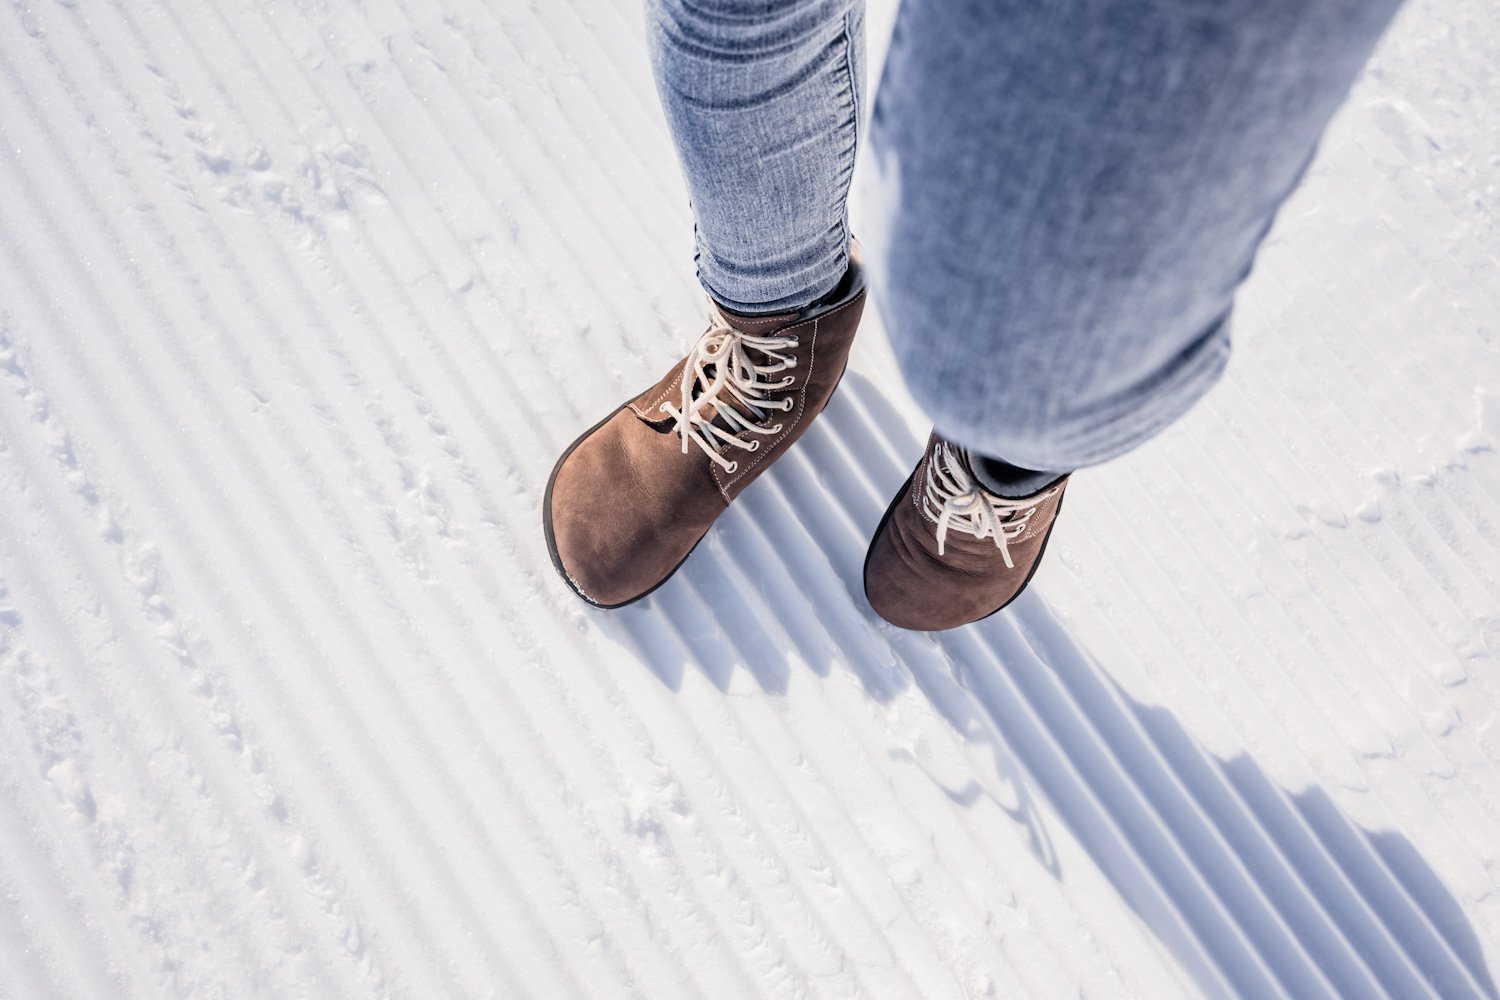 Winter Barefoot Boots Be Lenka Winter 3.0 - Black